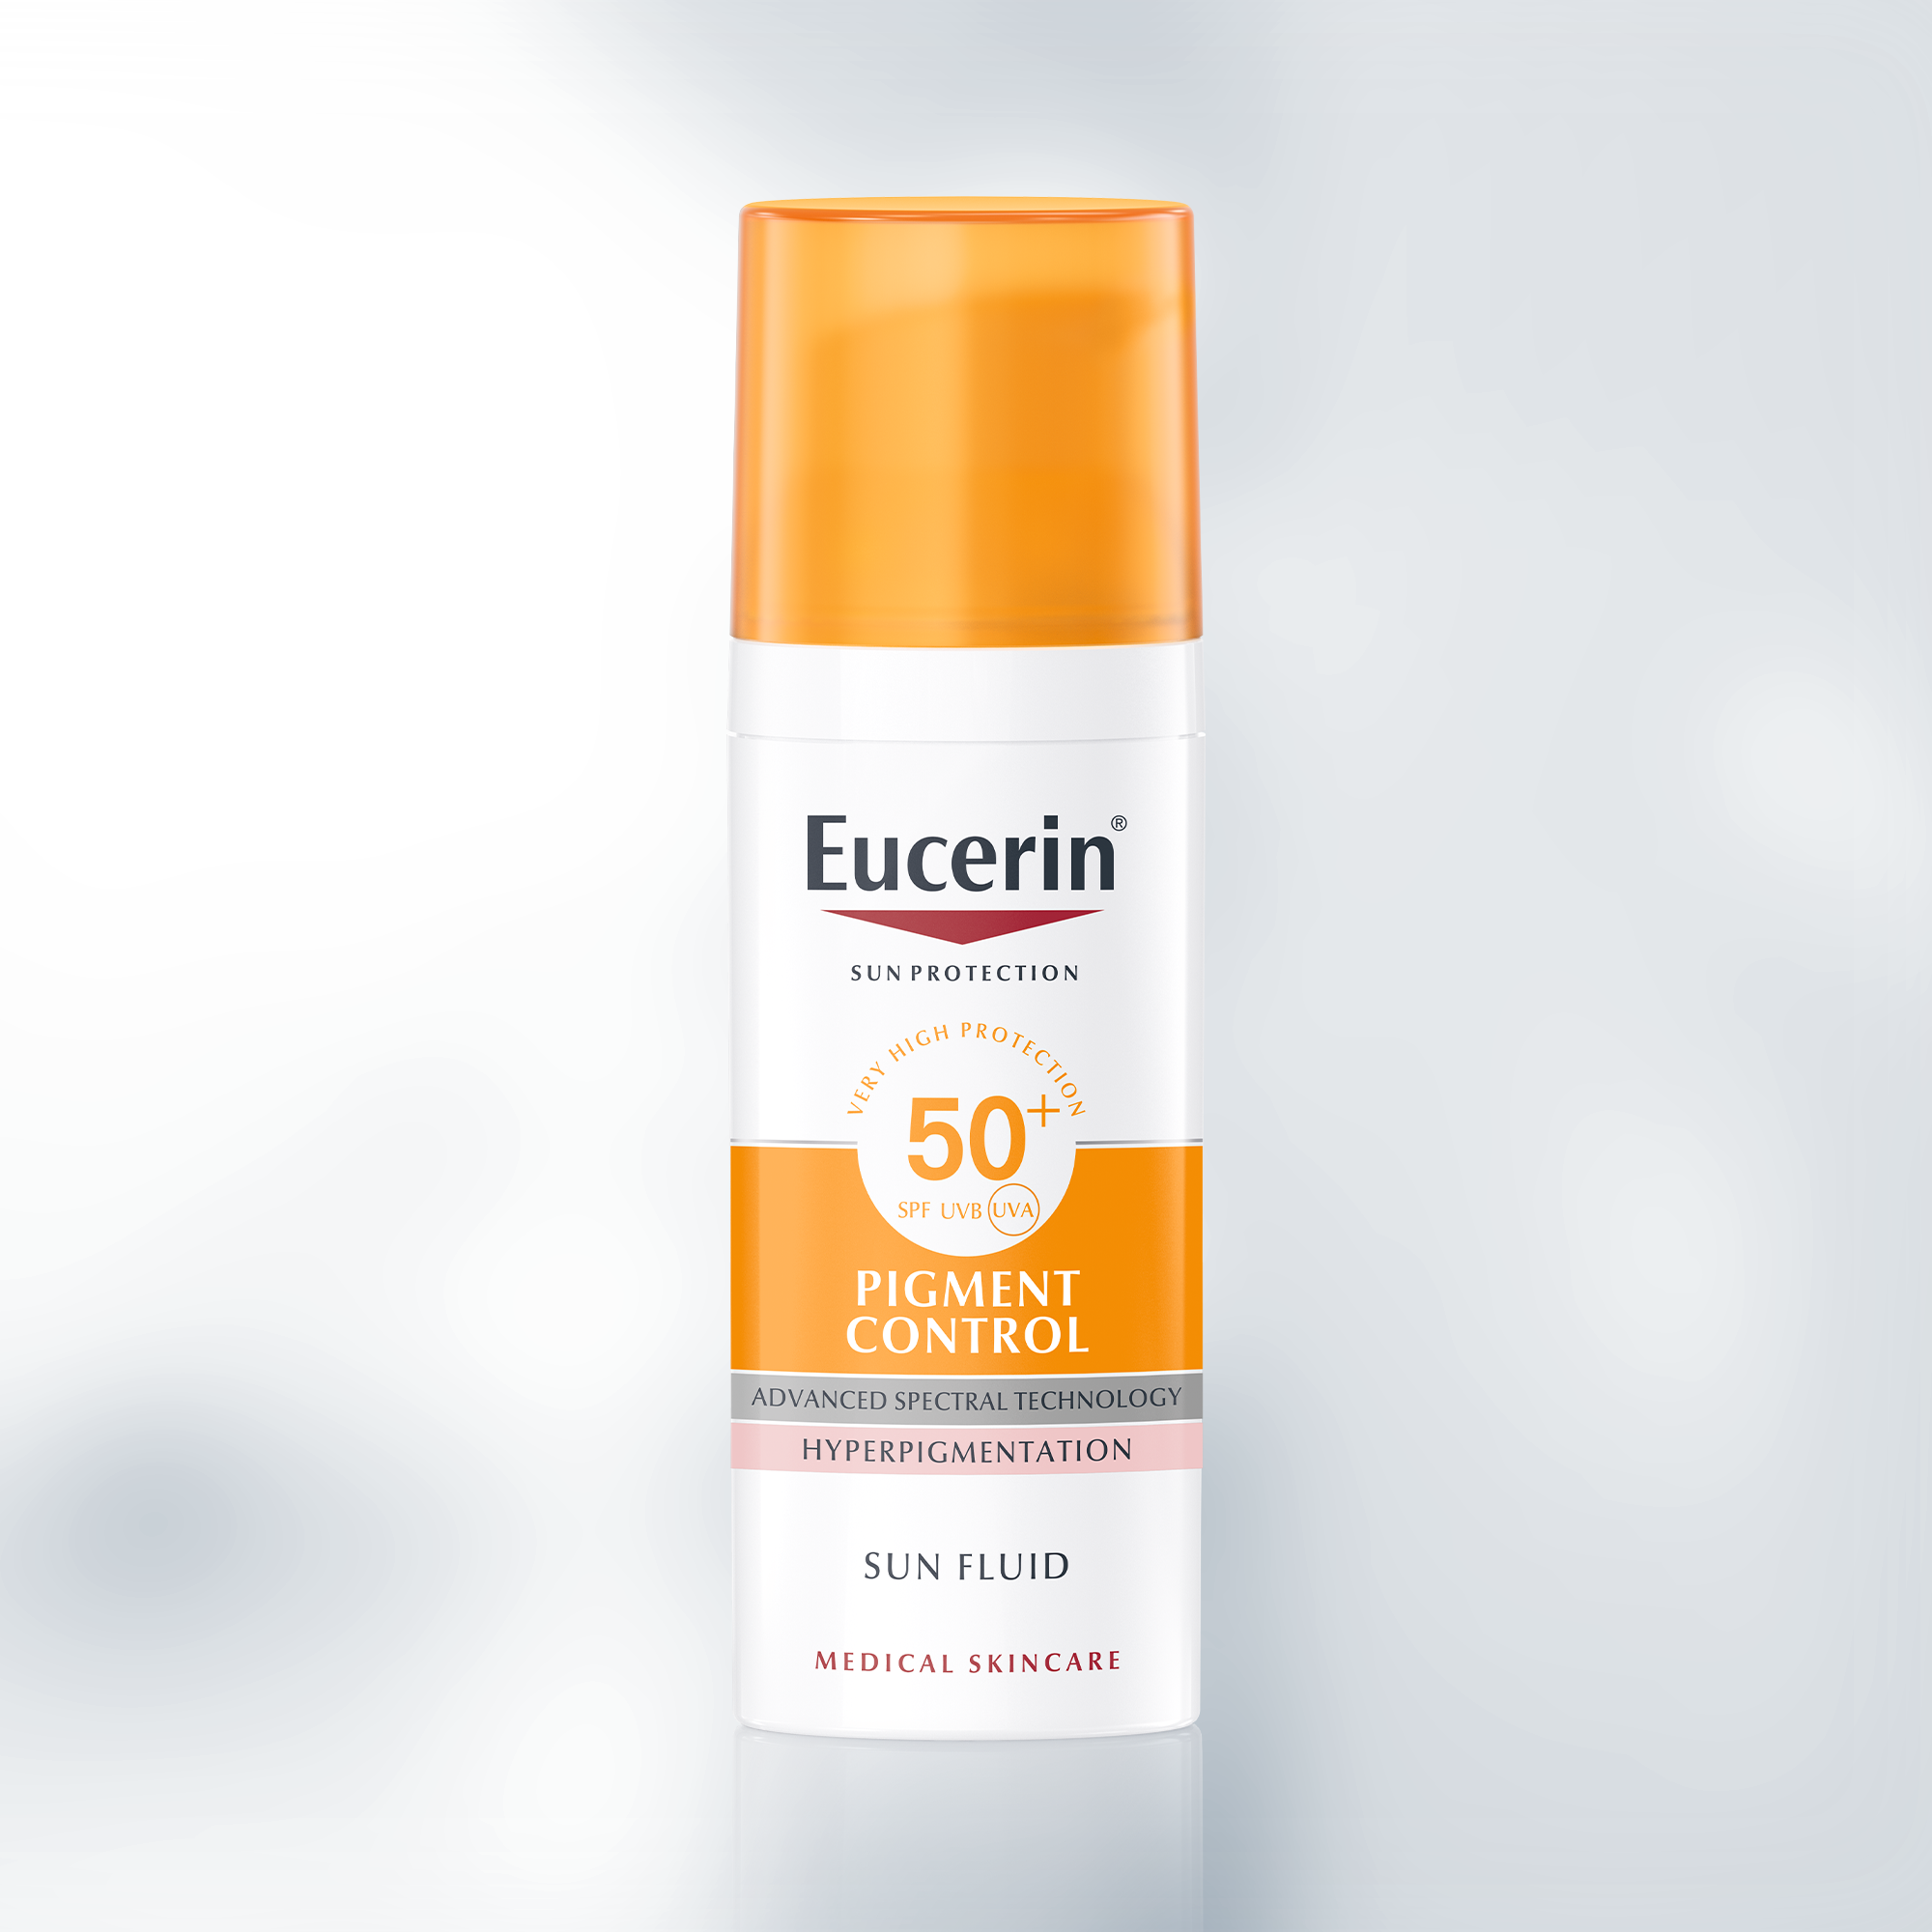 Pigment Control fluid za zaštitu kože lica od sunca SPF 50+